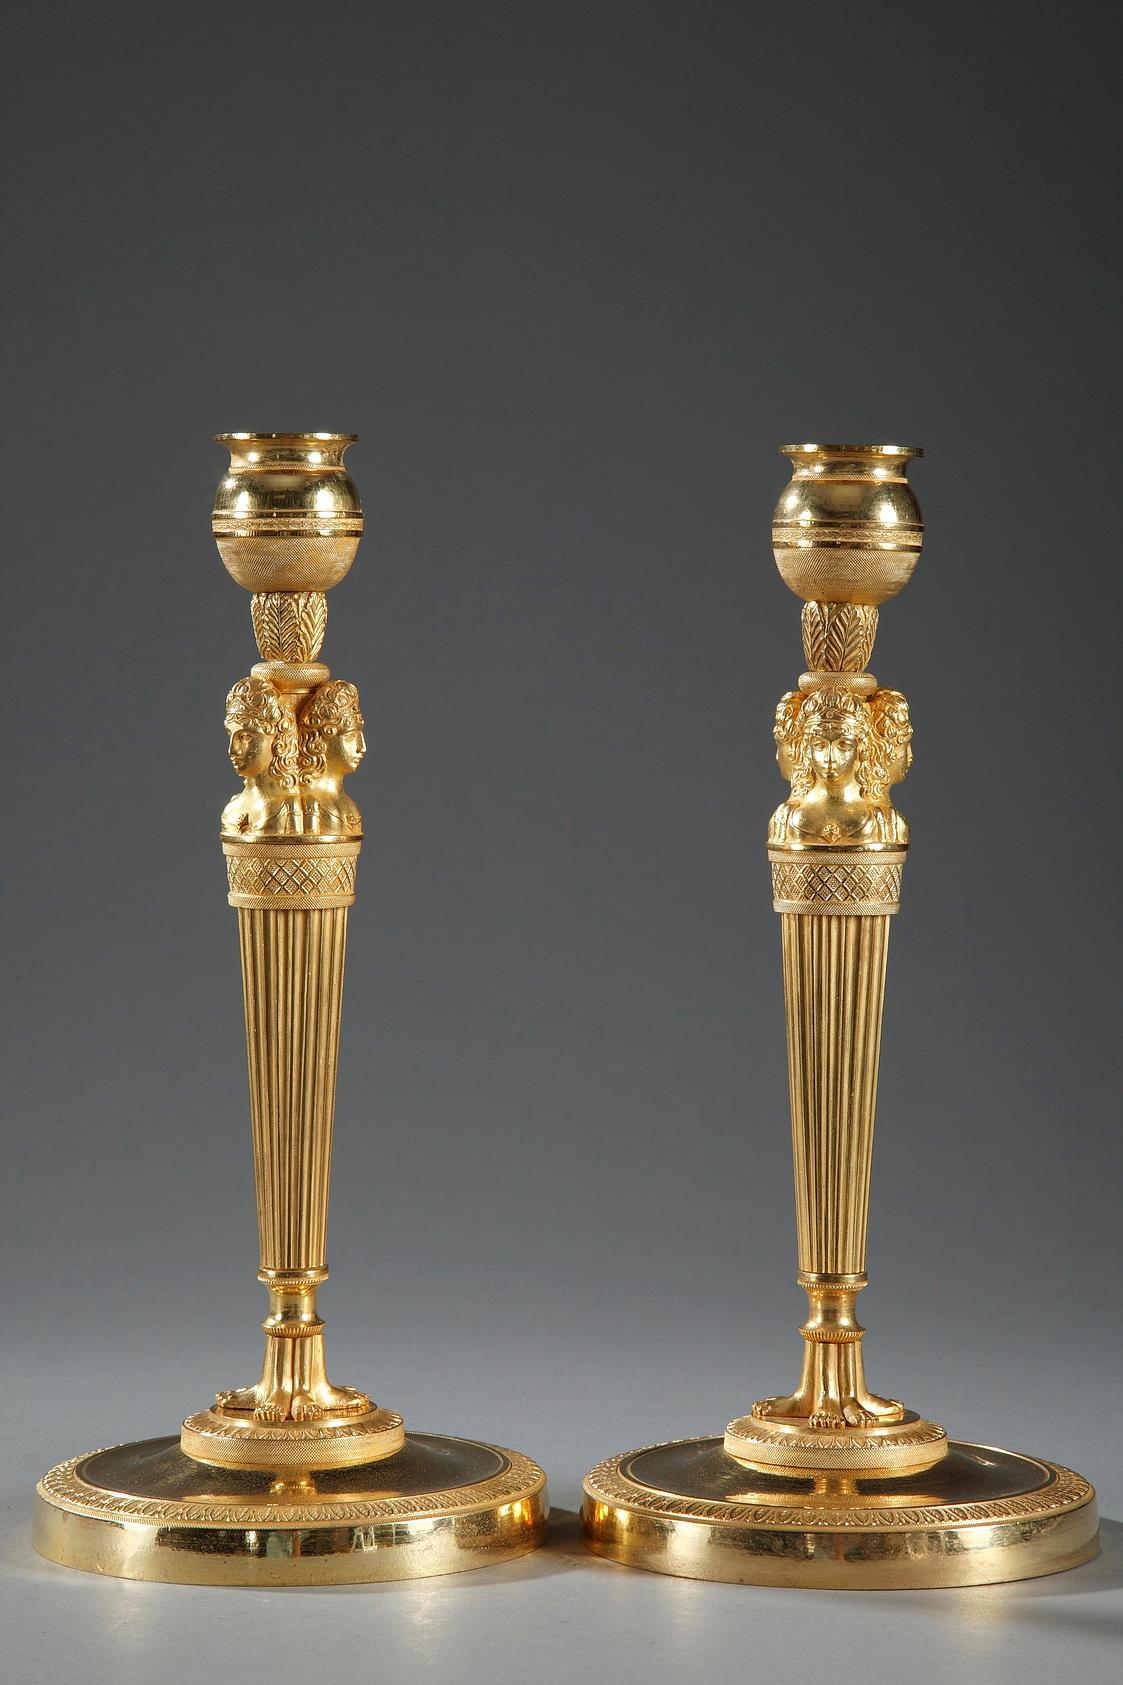 Pair of Empire candelsticks, Empire, caryatid, 18th century